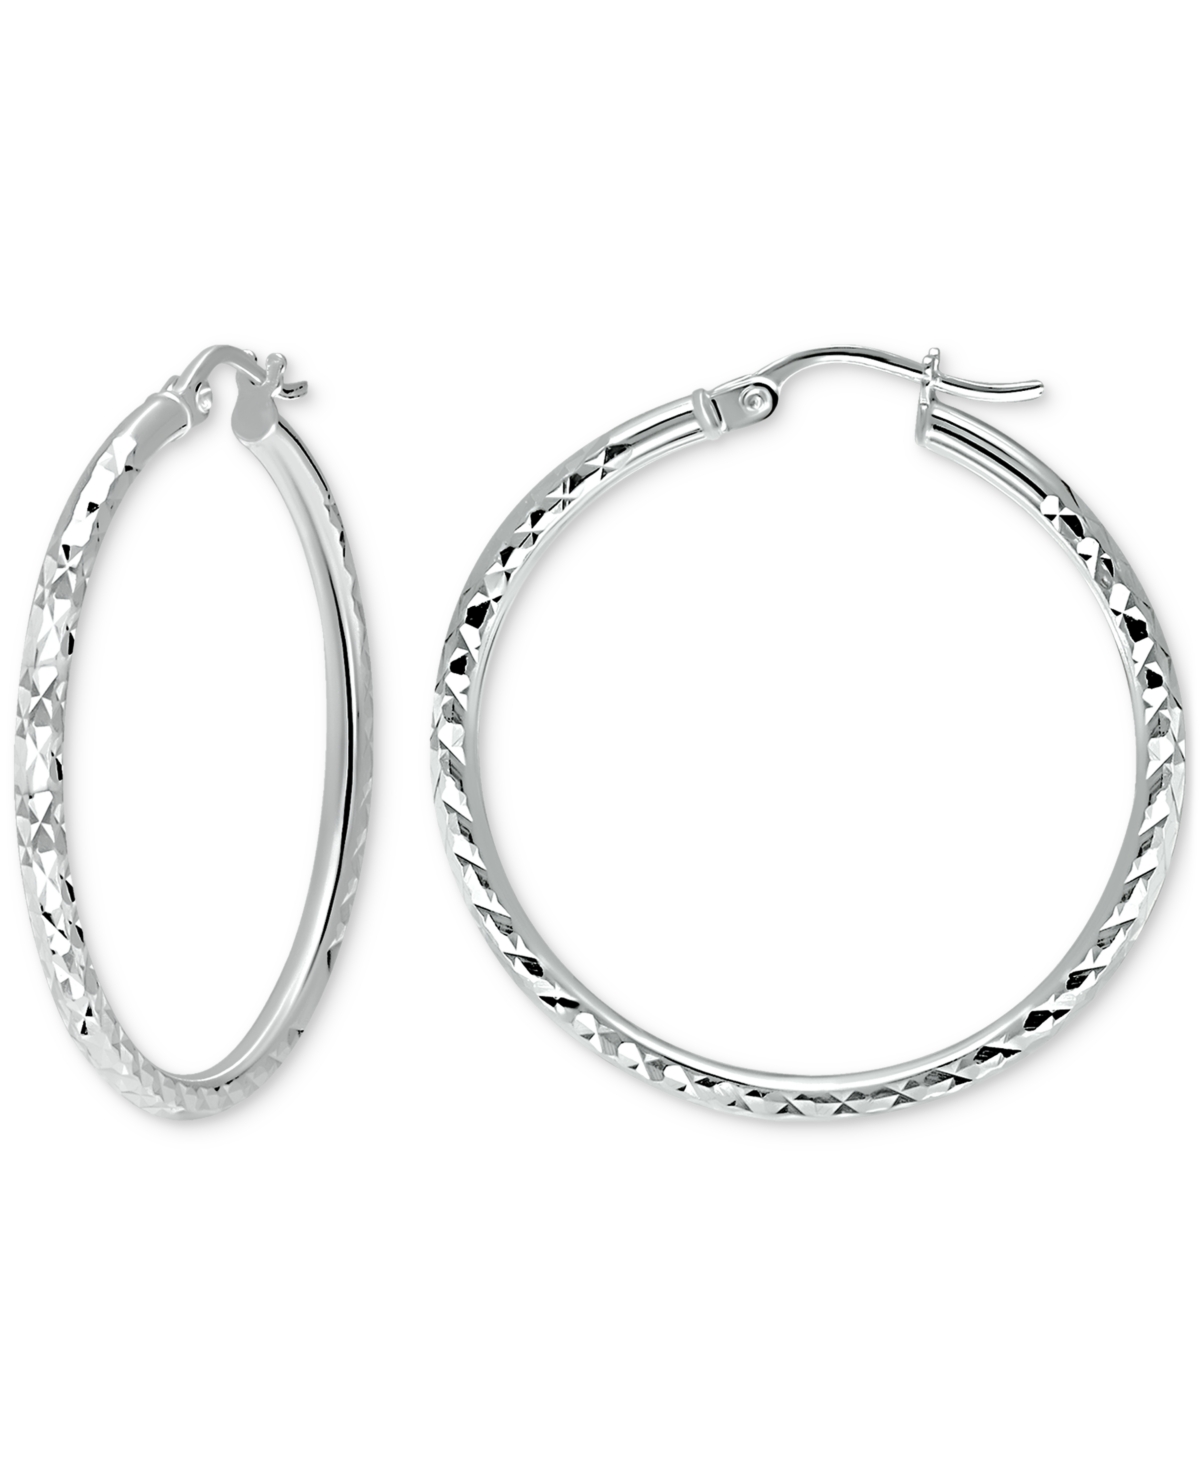 Giani Bernini Textured Medium Hoop Earrings In Sterling Silver, 30mm, Created For Macy's